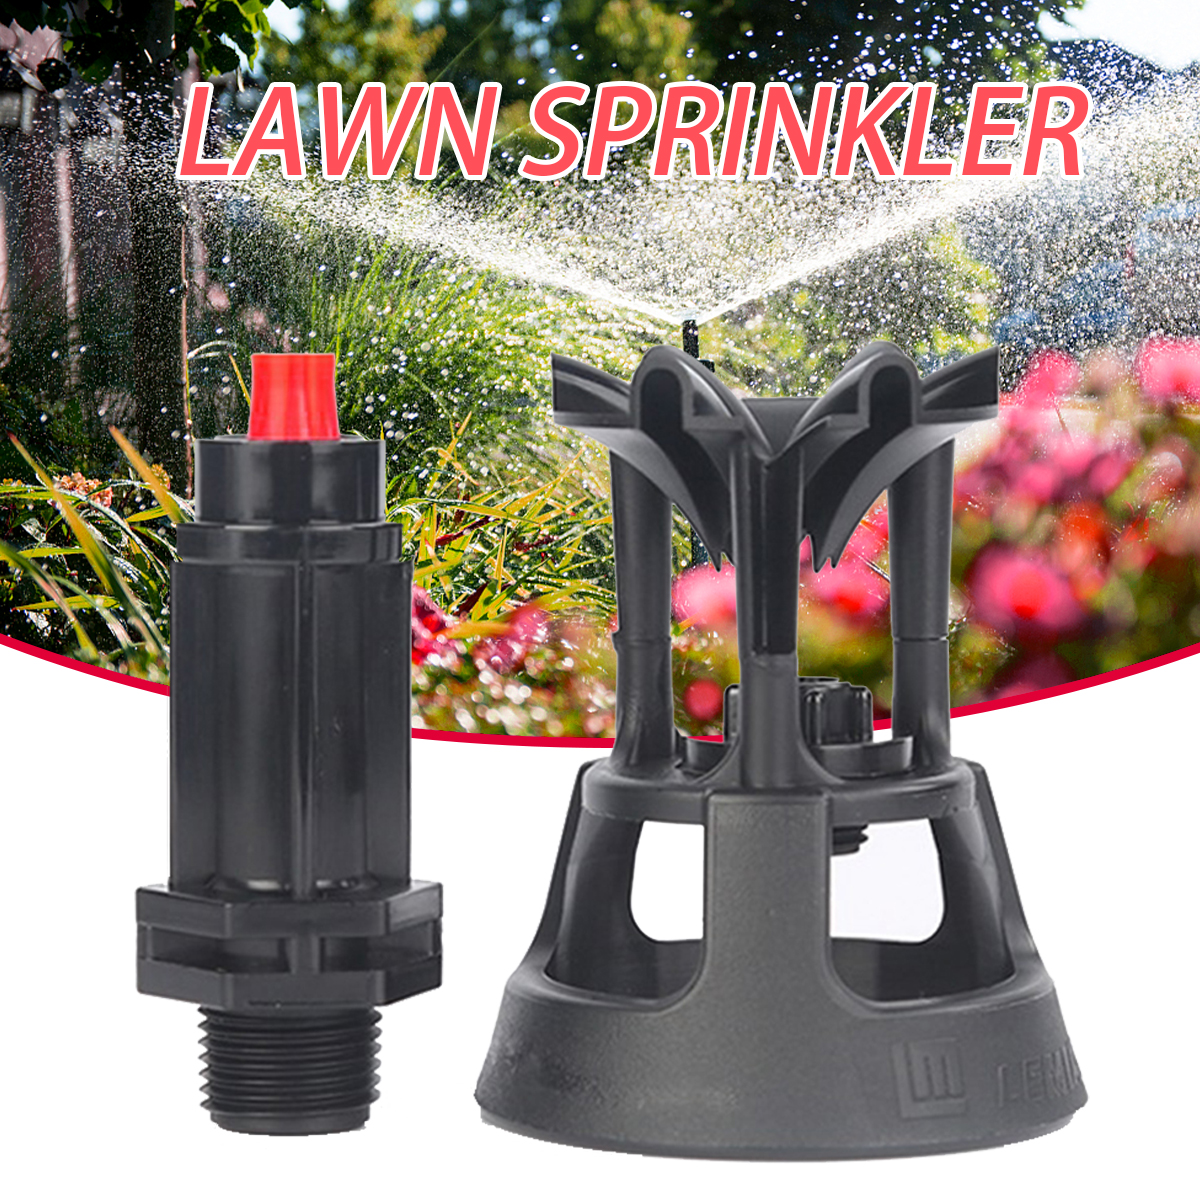 Lawn-Sprinkler-Nozzle-Garden-Irrigation-Water-Sprinkl-Sprayer-Plastic-Rotating-1706402